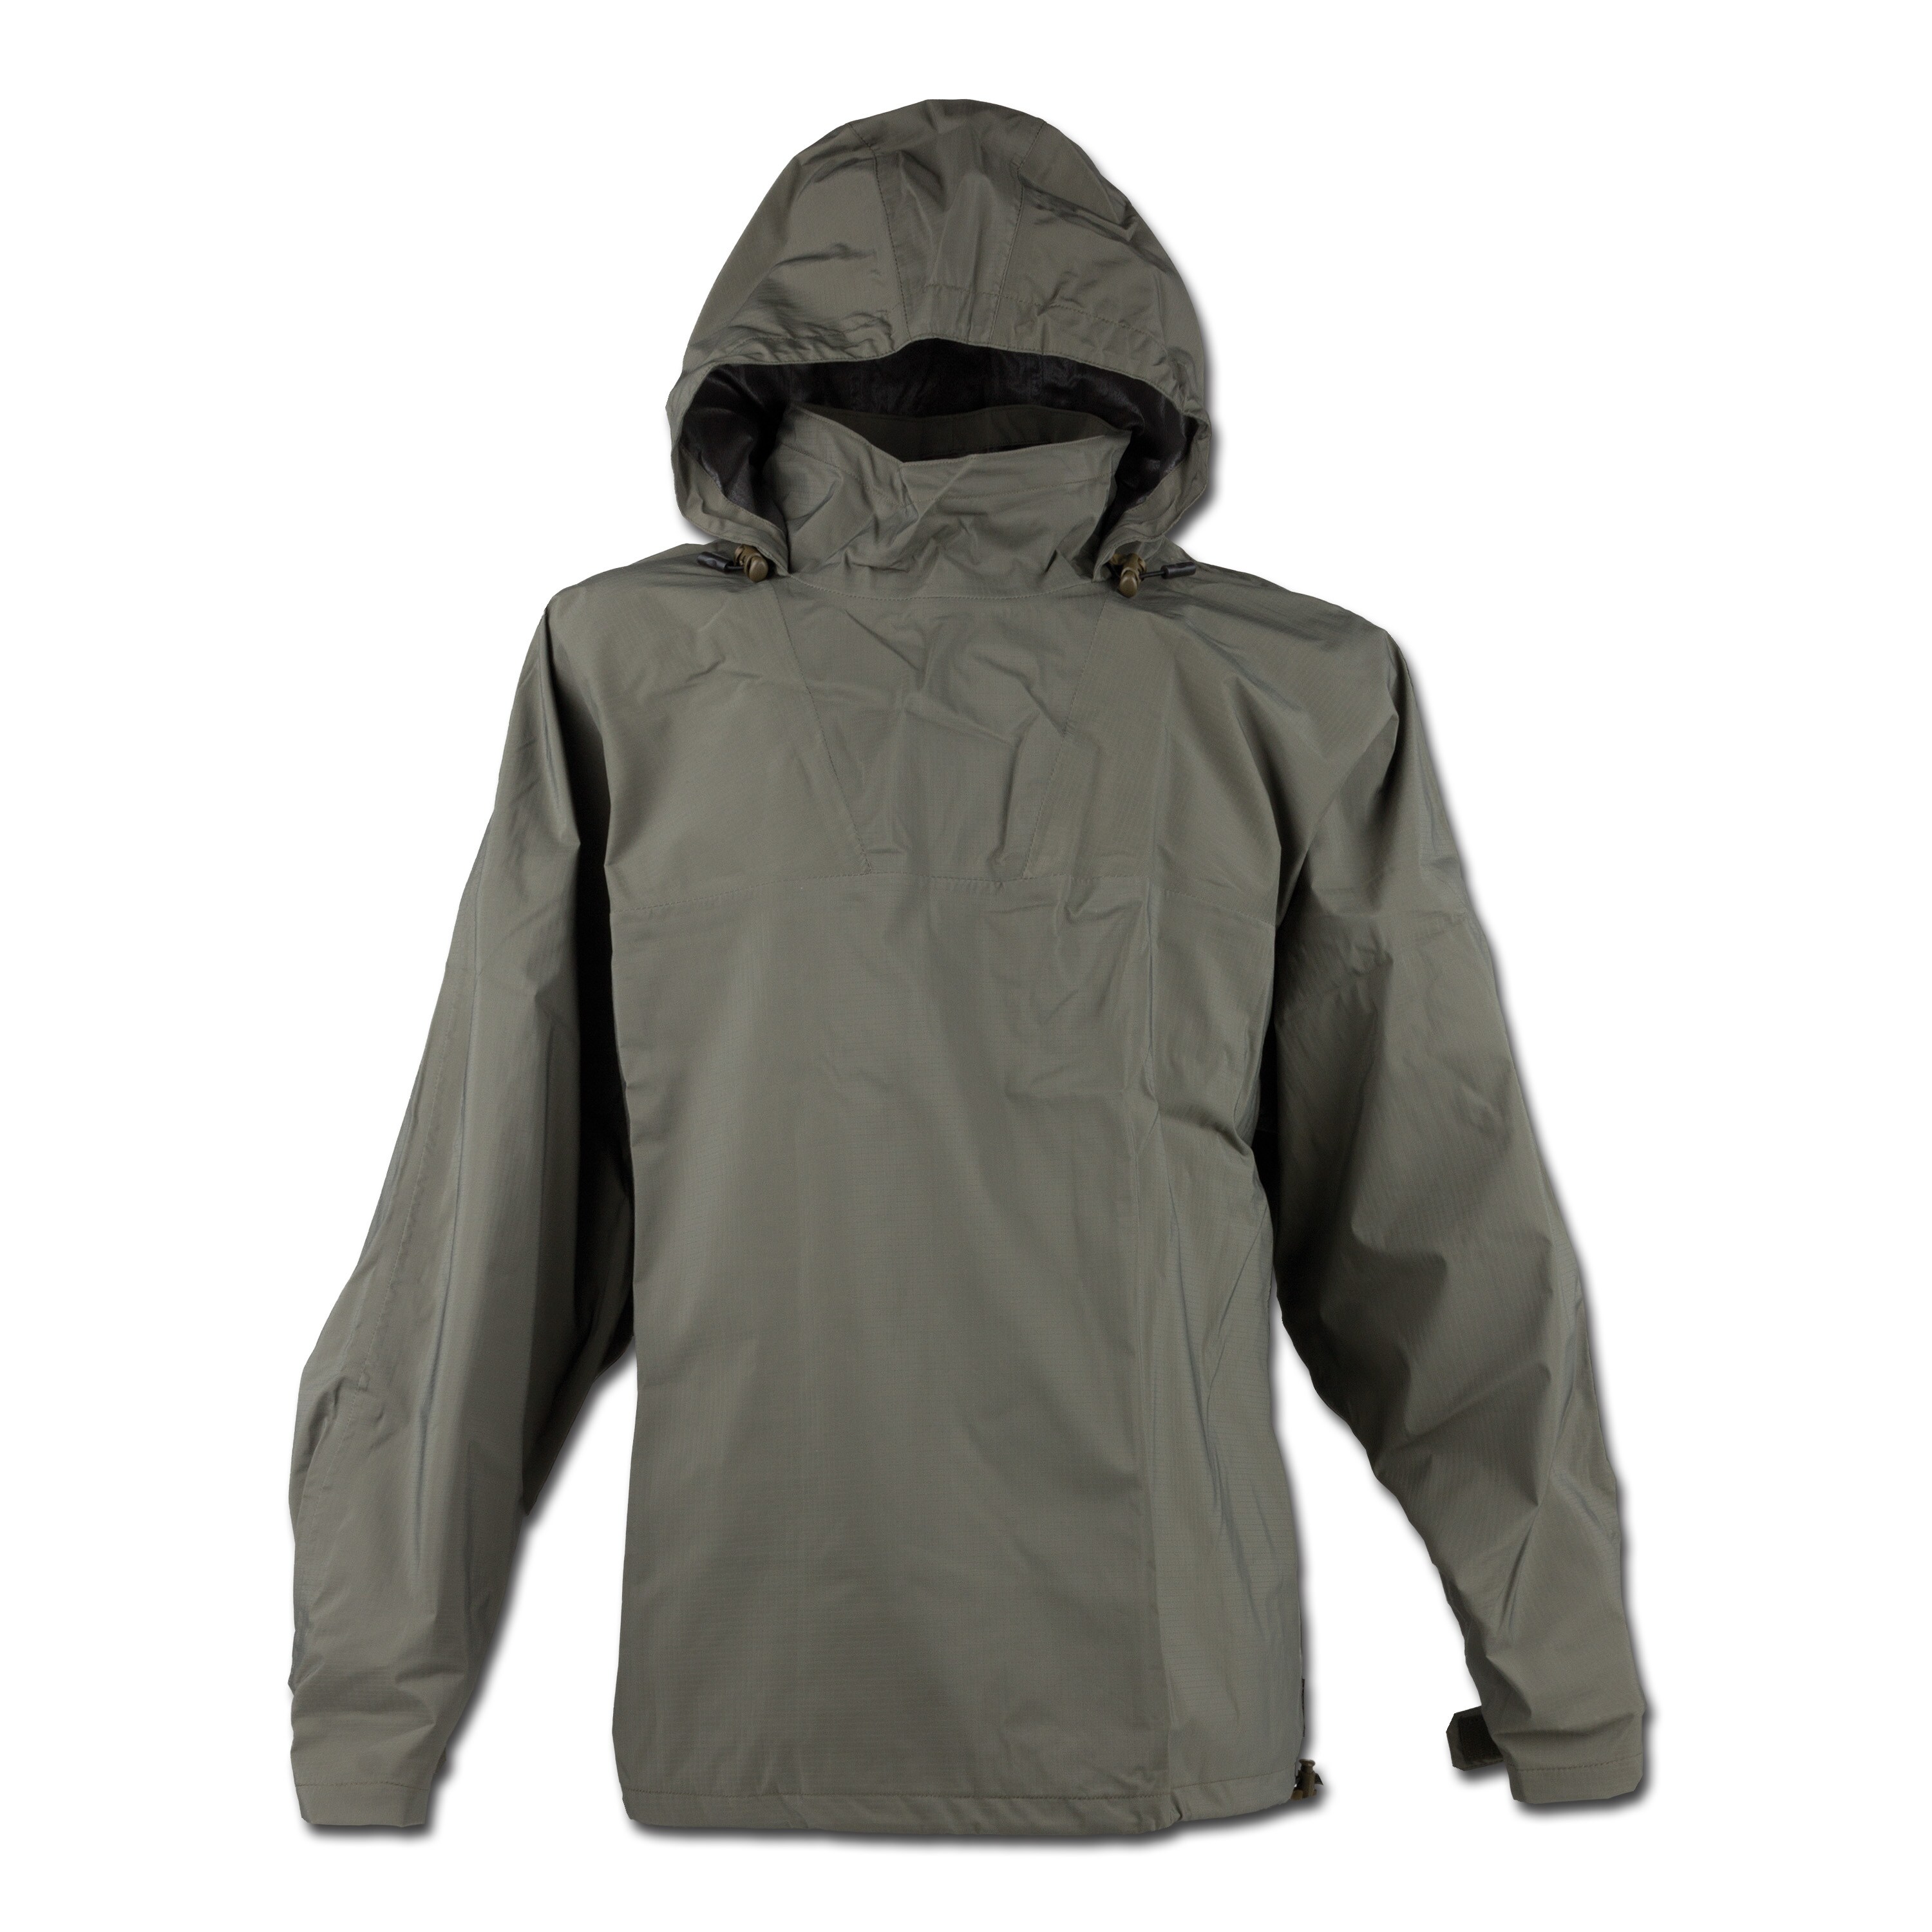 Carinthia Survival Rain Suit Jacket olive | Carinthia Survival Rain ...